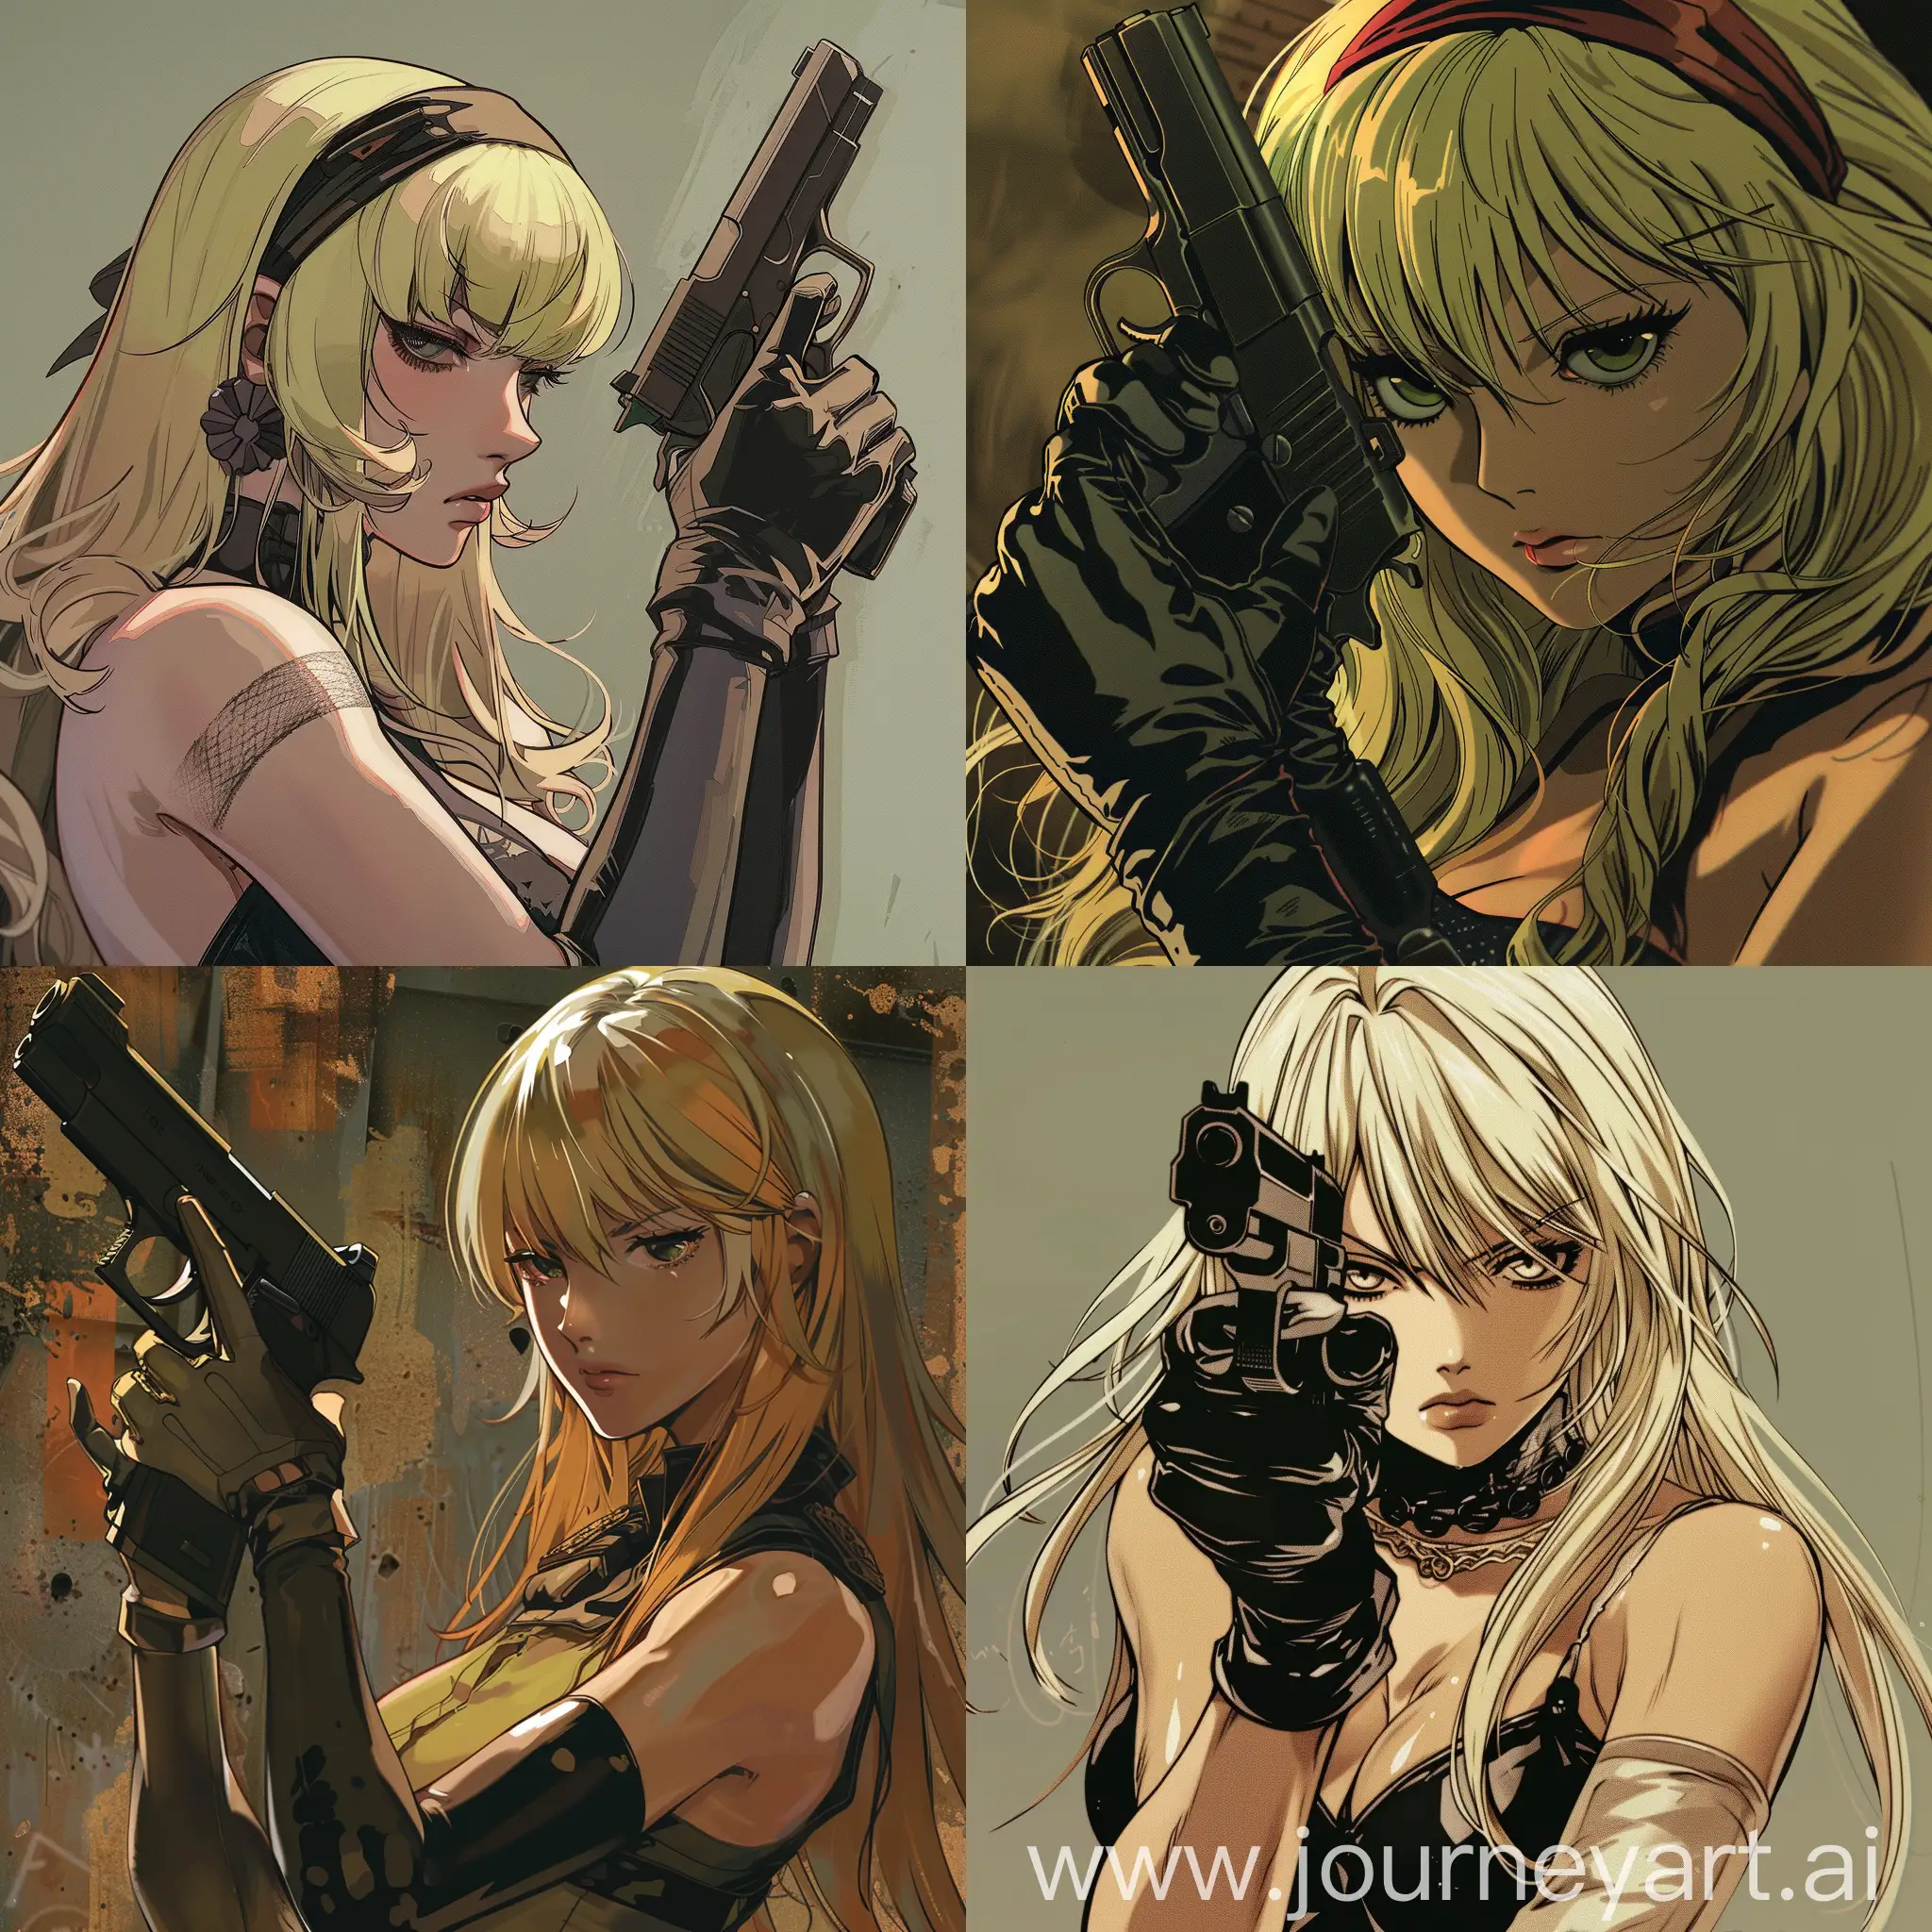 Blonde-Girl-in-Retro-Anime-Style-Holding-a-Gun